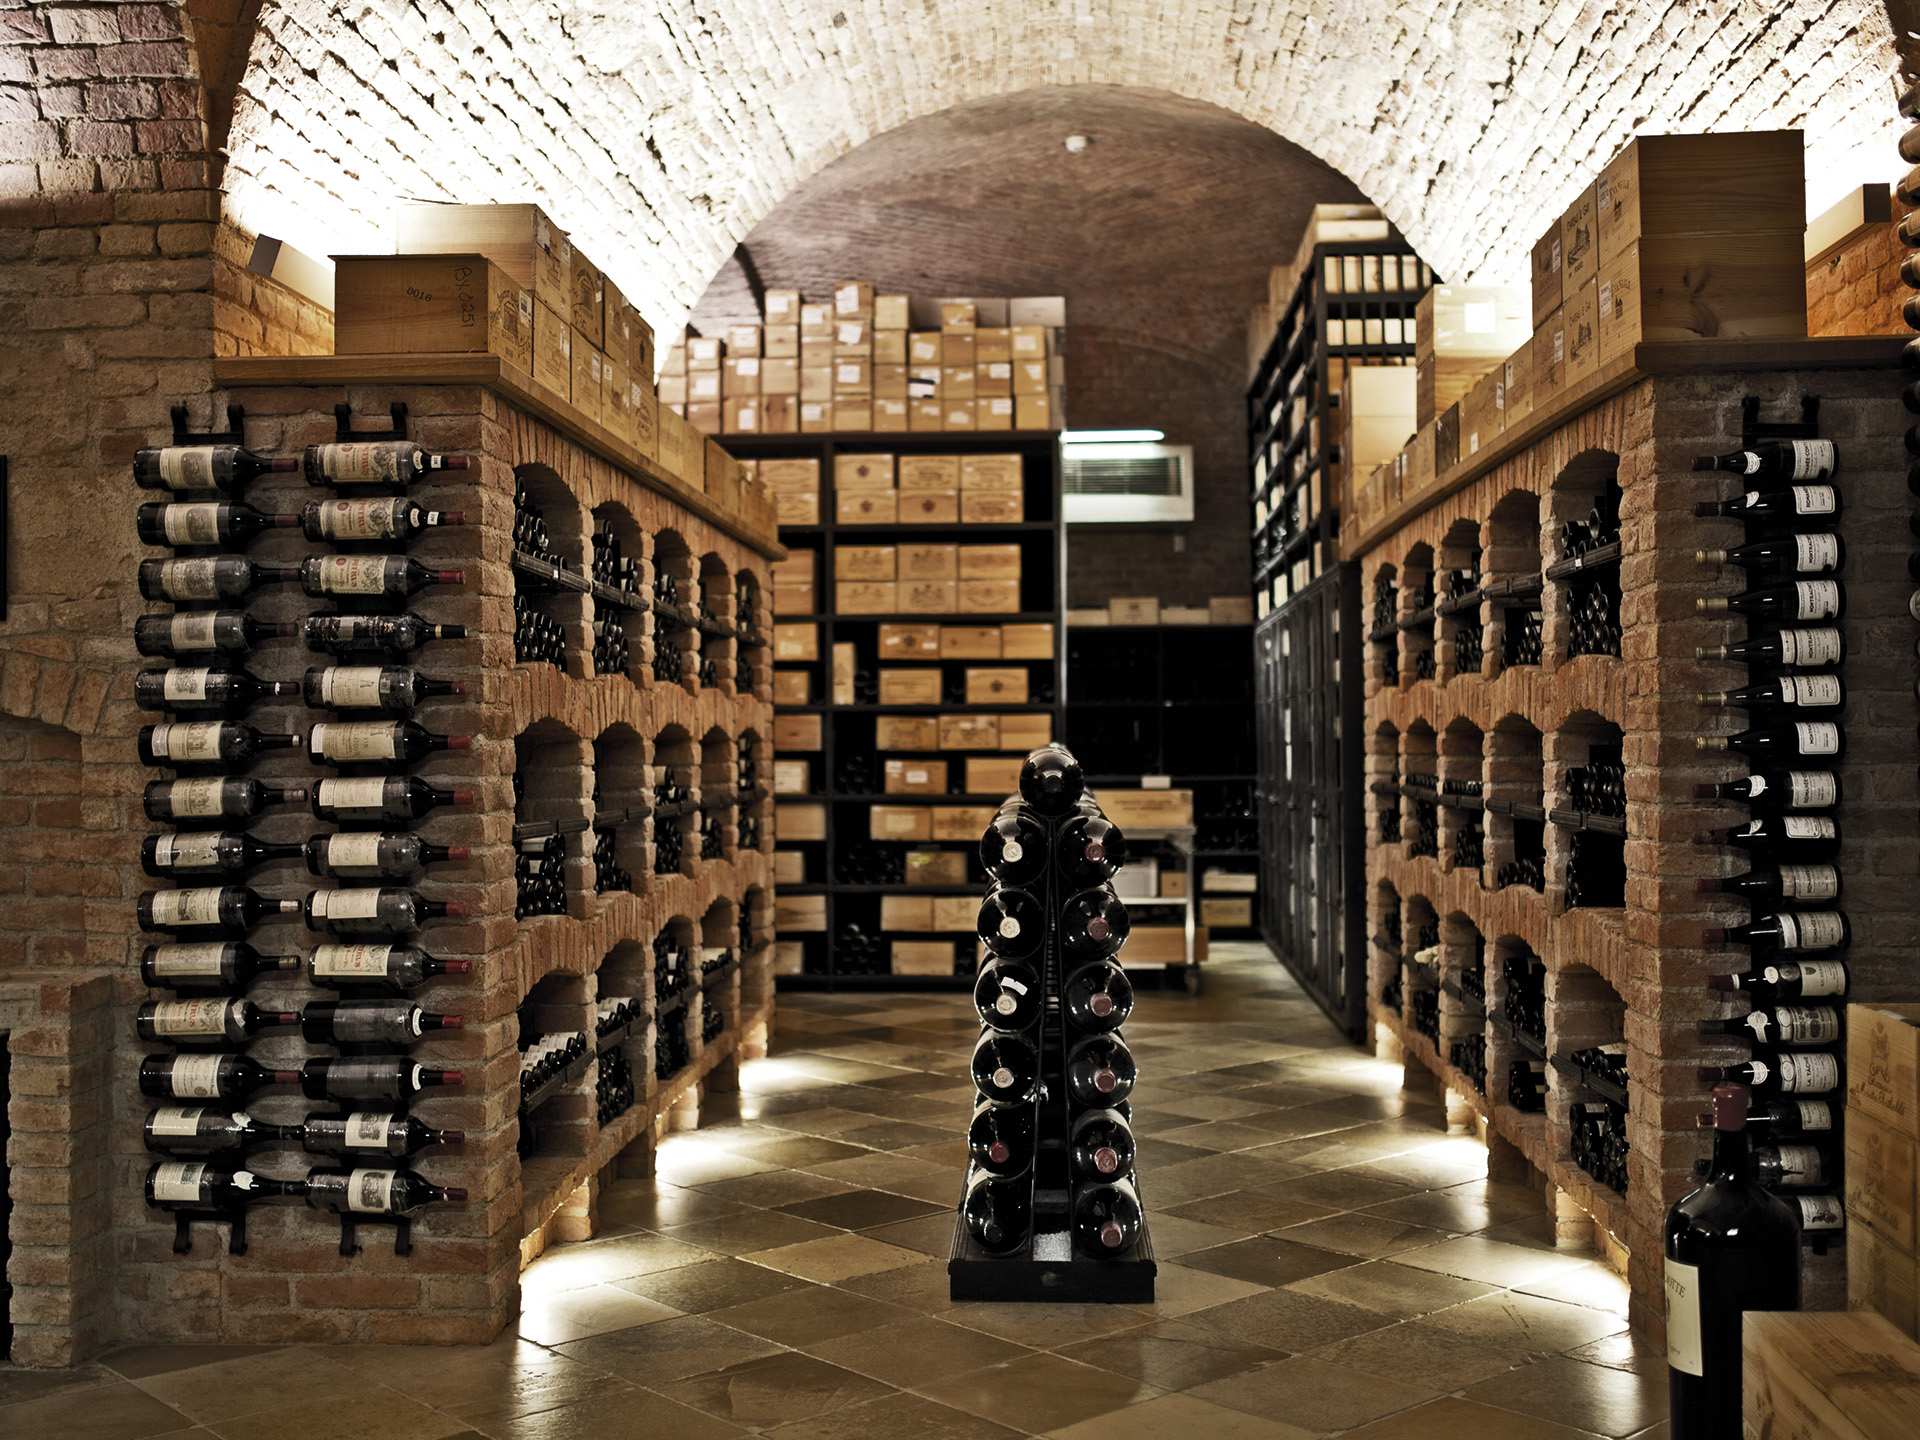 The wine cellar at Palais Coburg